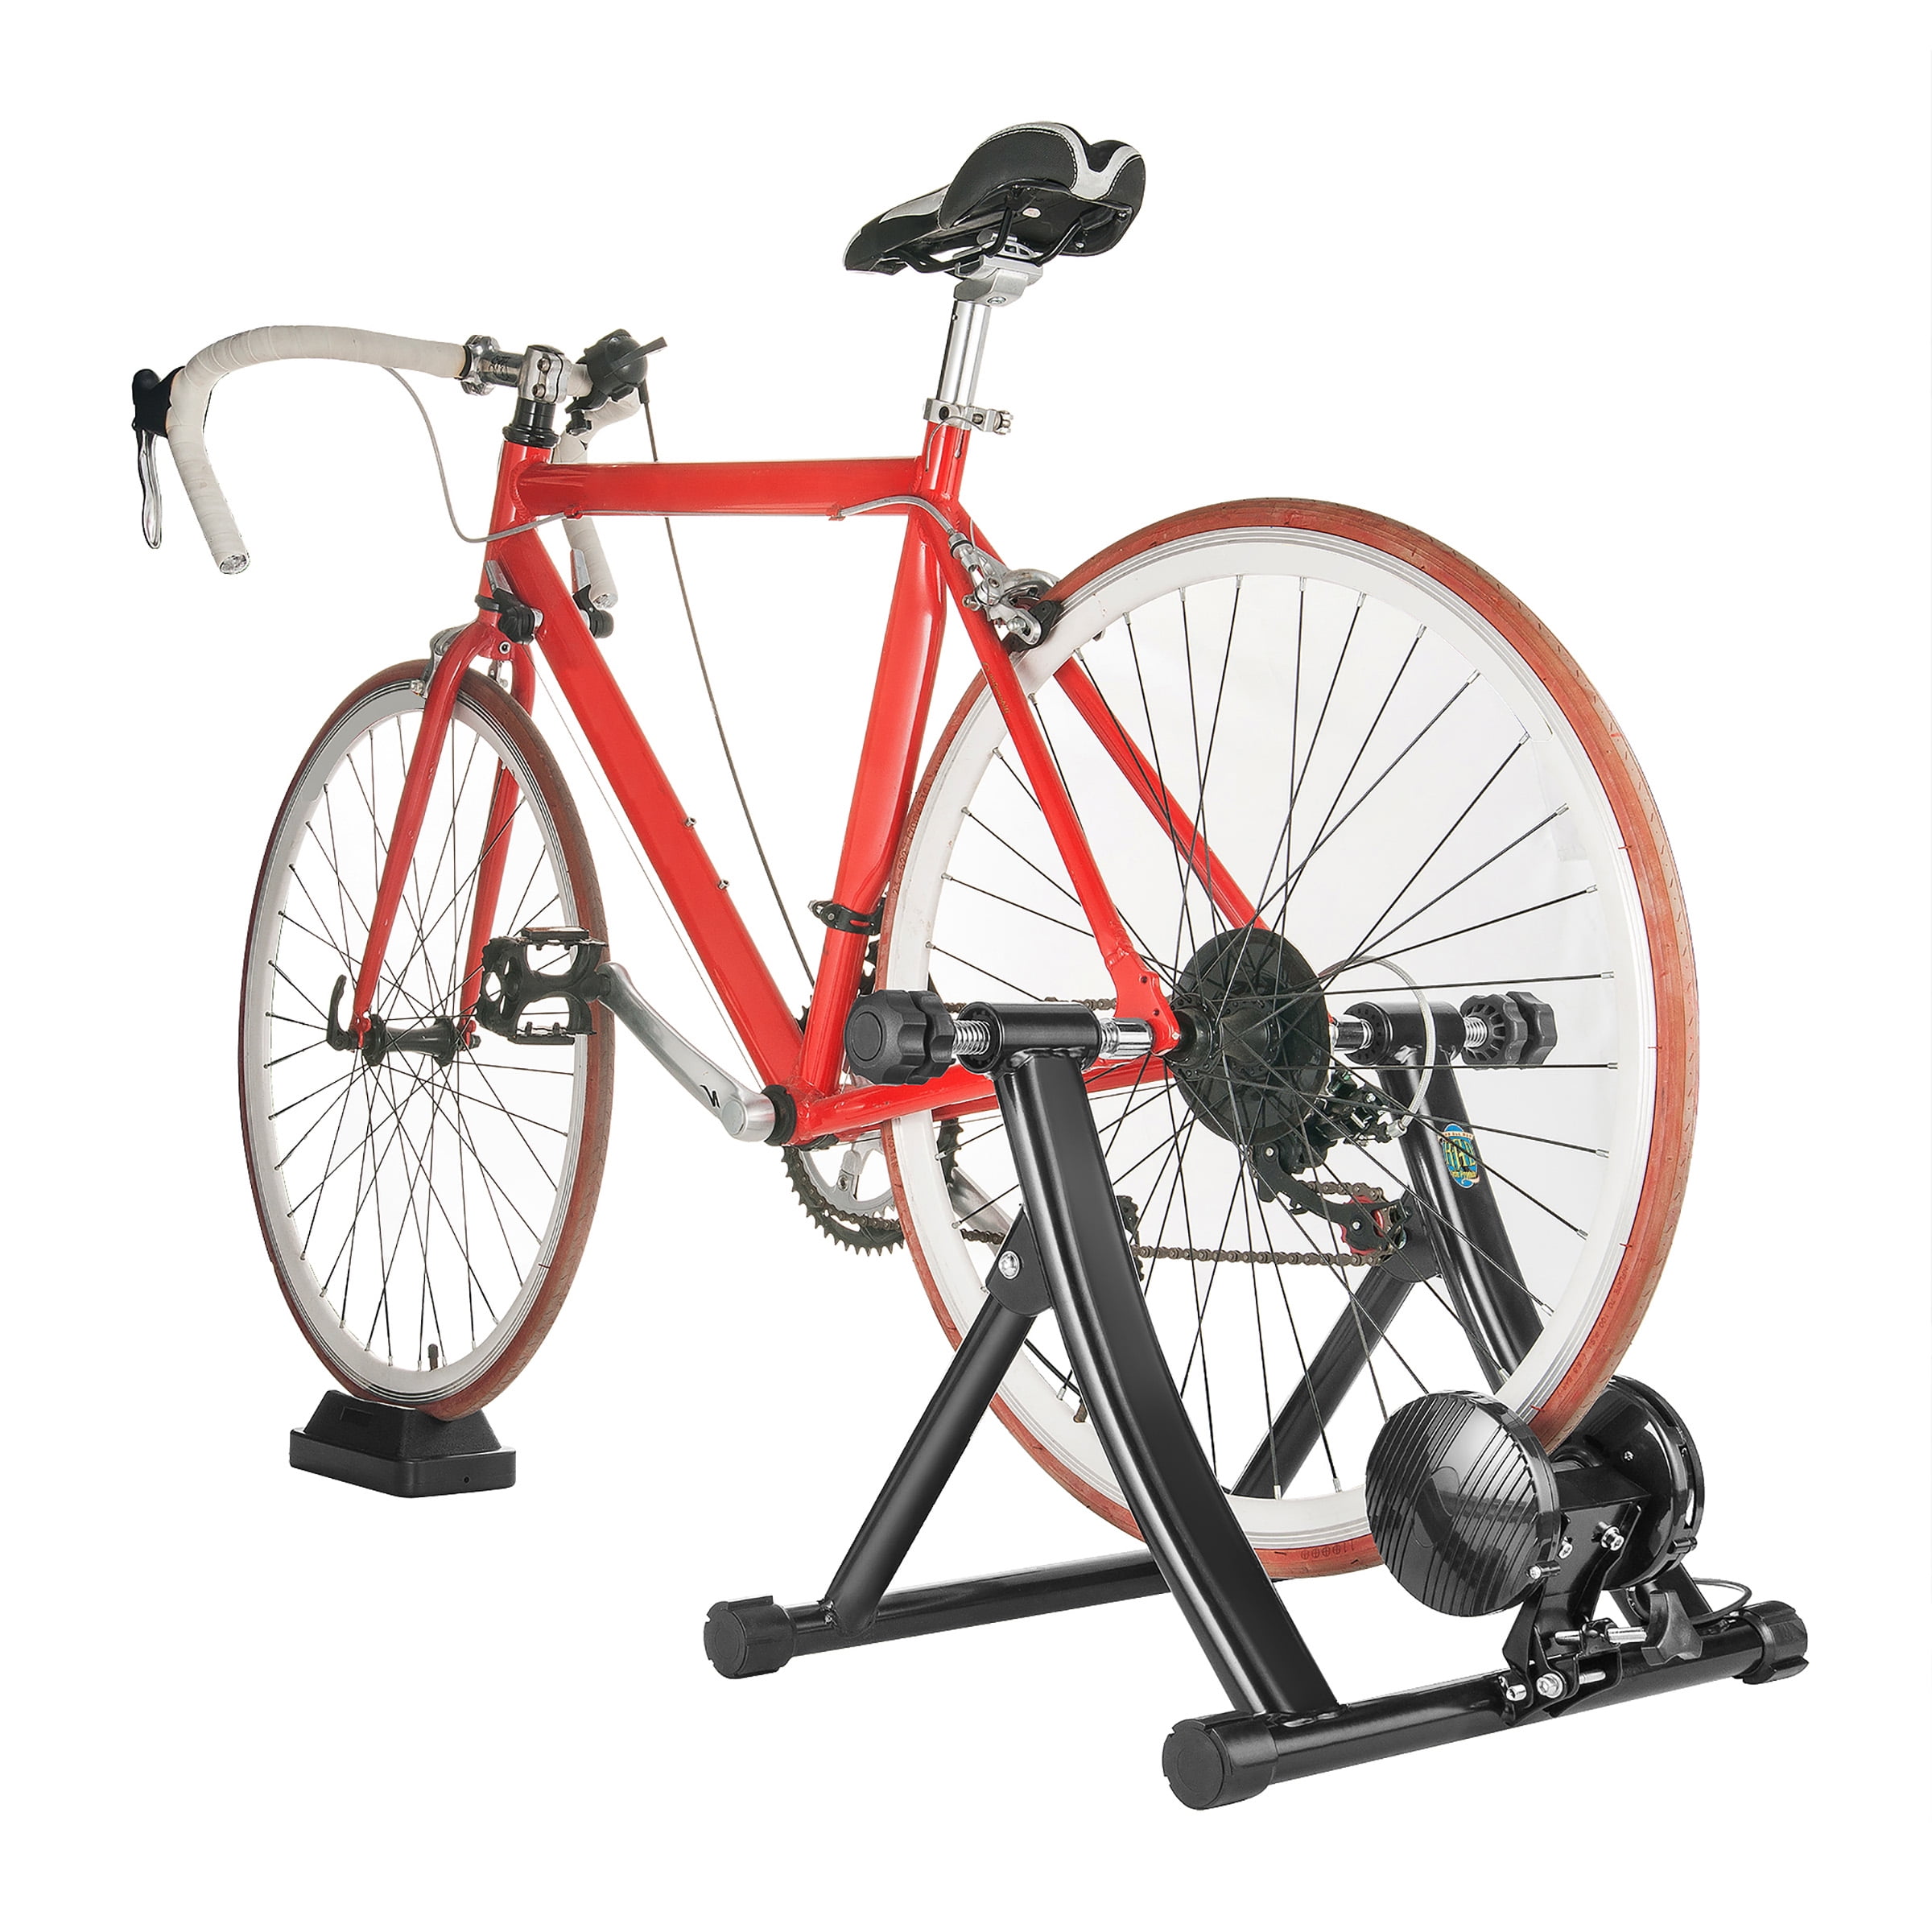 The Elite Bicycle. Bike Equipment. Bicycle Equipment. Pro rad.